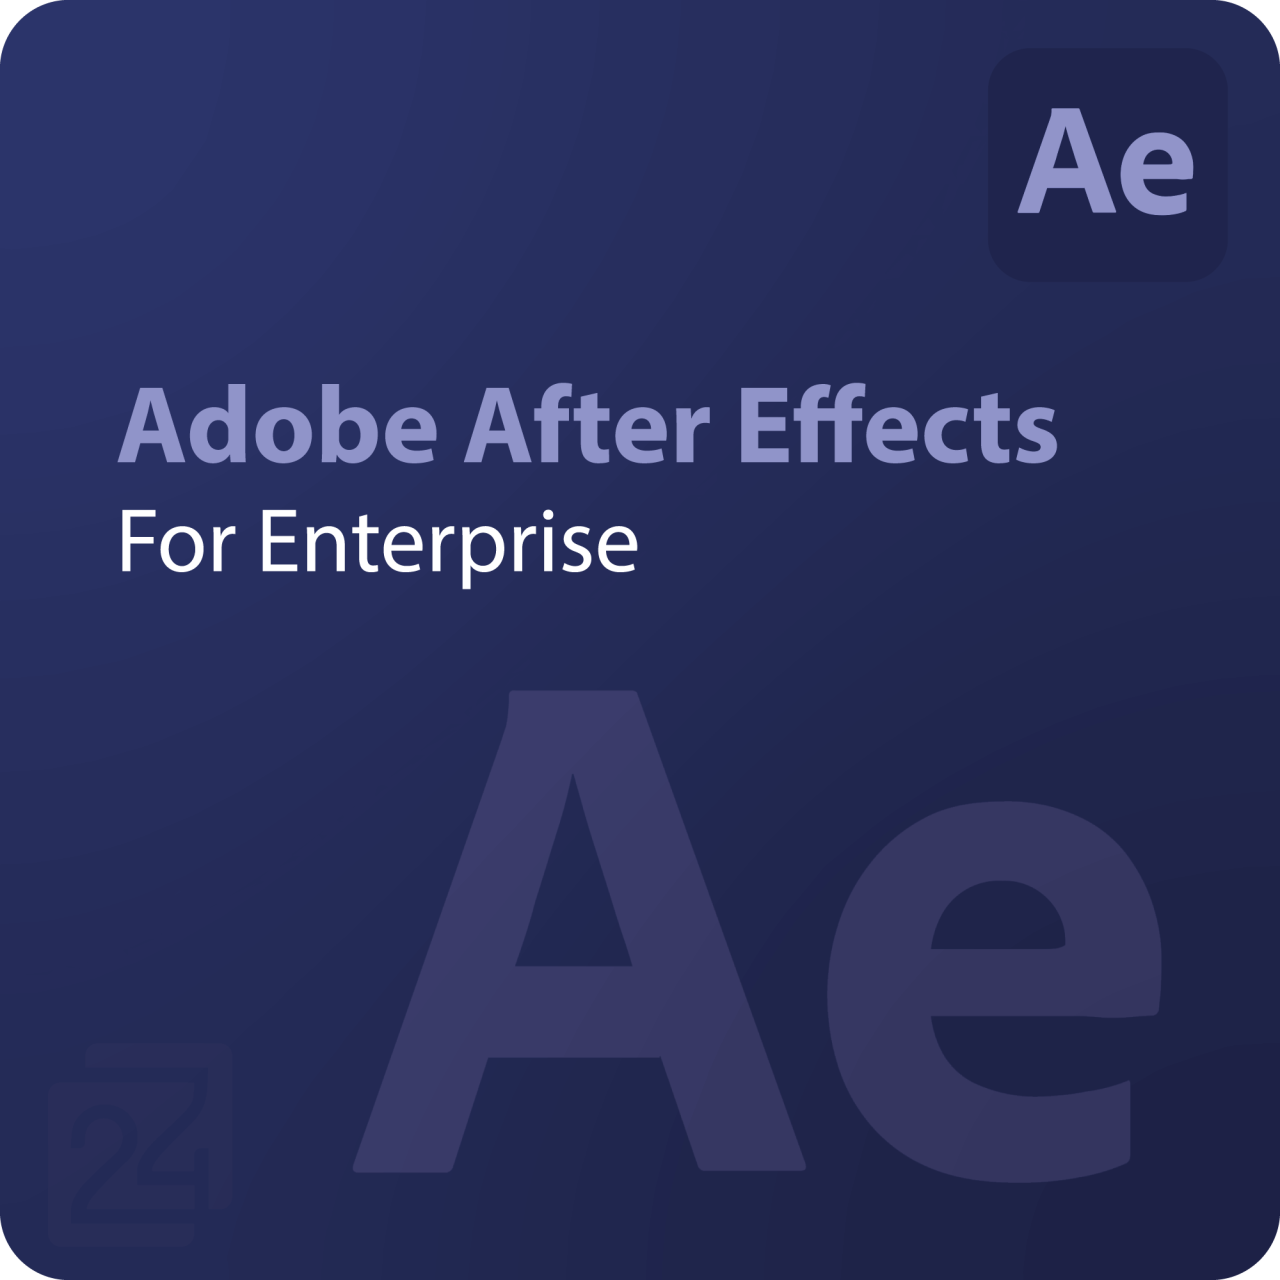 Adobe After Effects for Enterprise